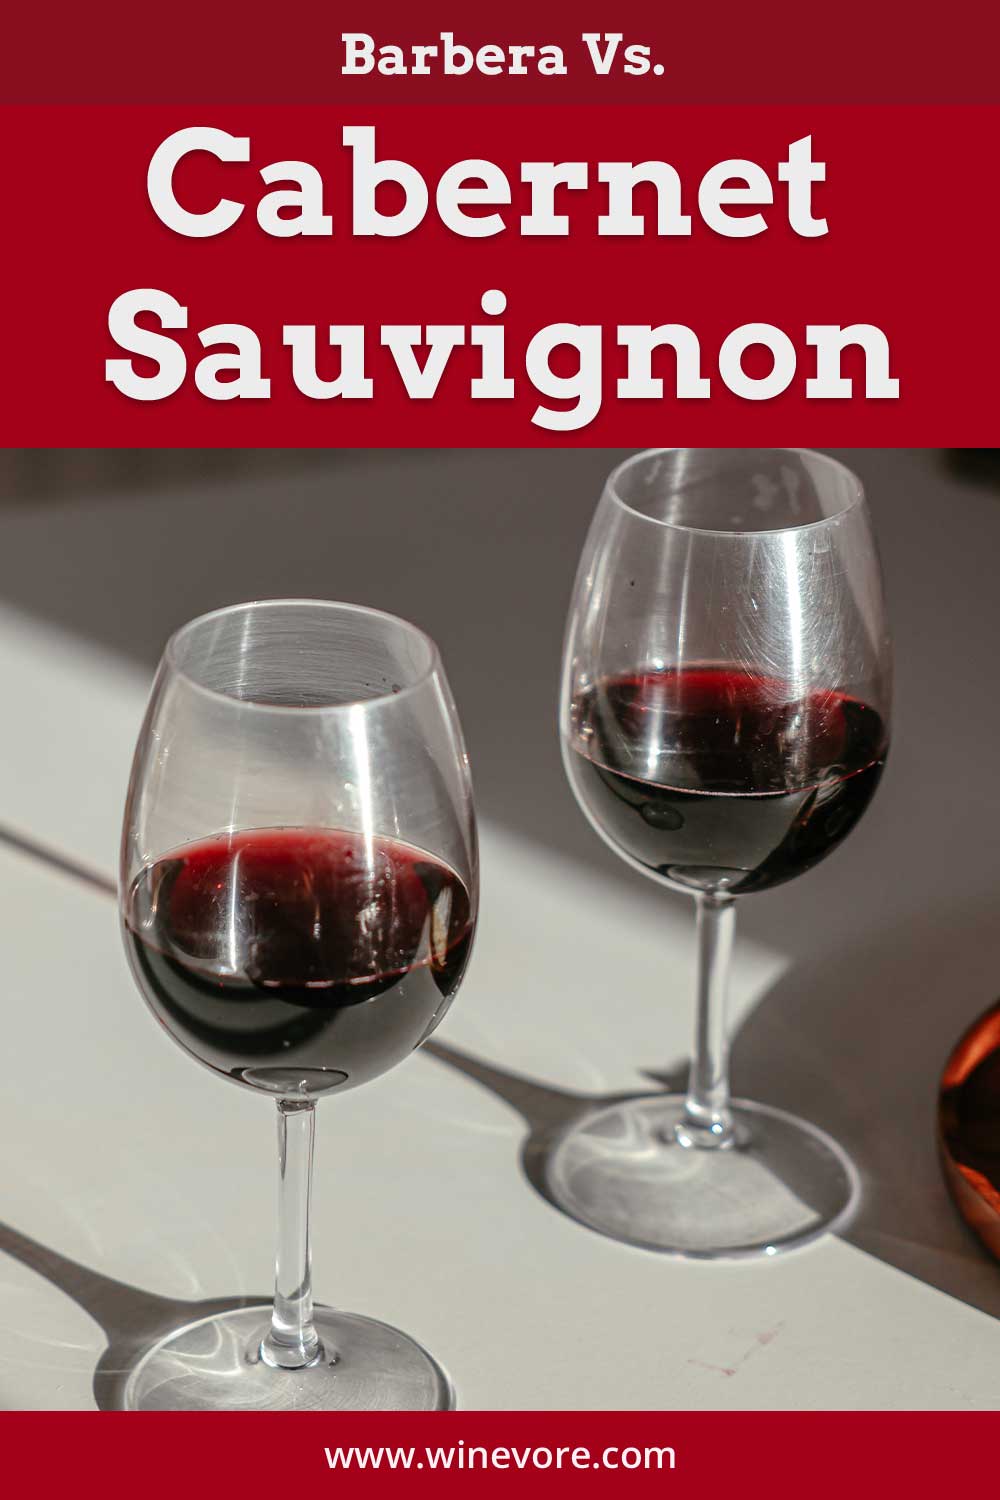 Two glasses of red wine on a white surface - Barbera Vs. Cabernet Sauvignon.